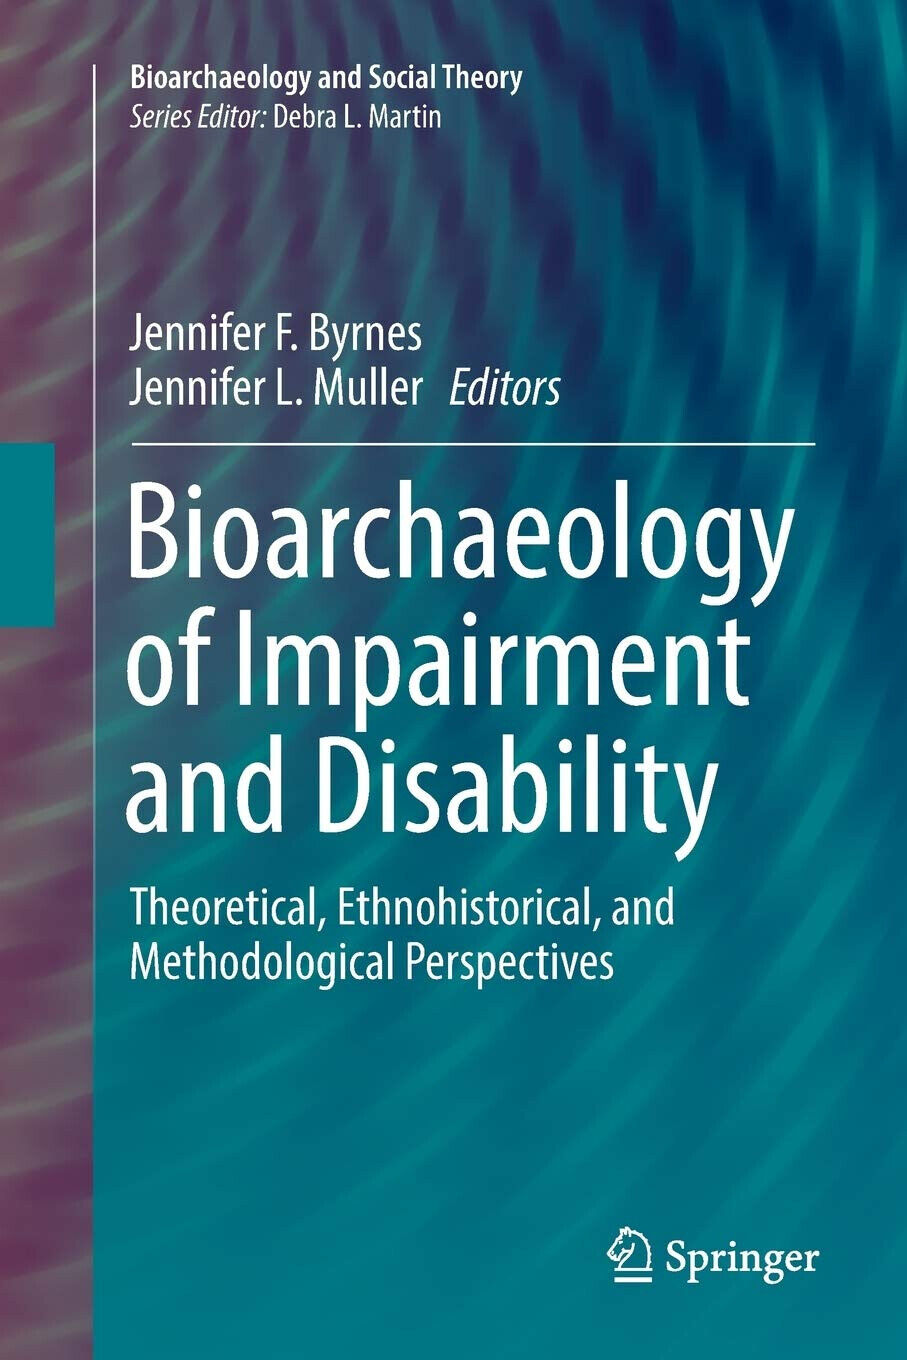 Bioarchaeology of Impairment and Disability - Jennifer F. Byrnes - Springer, 201